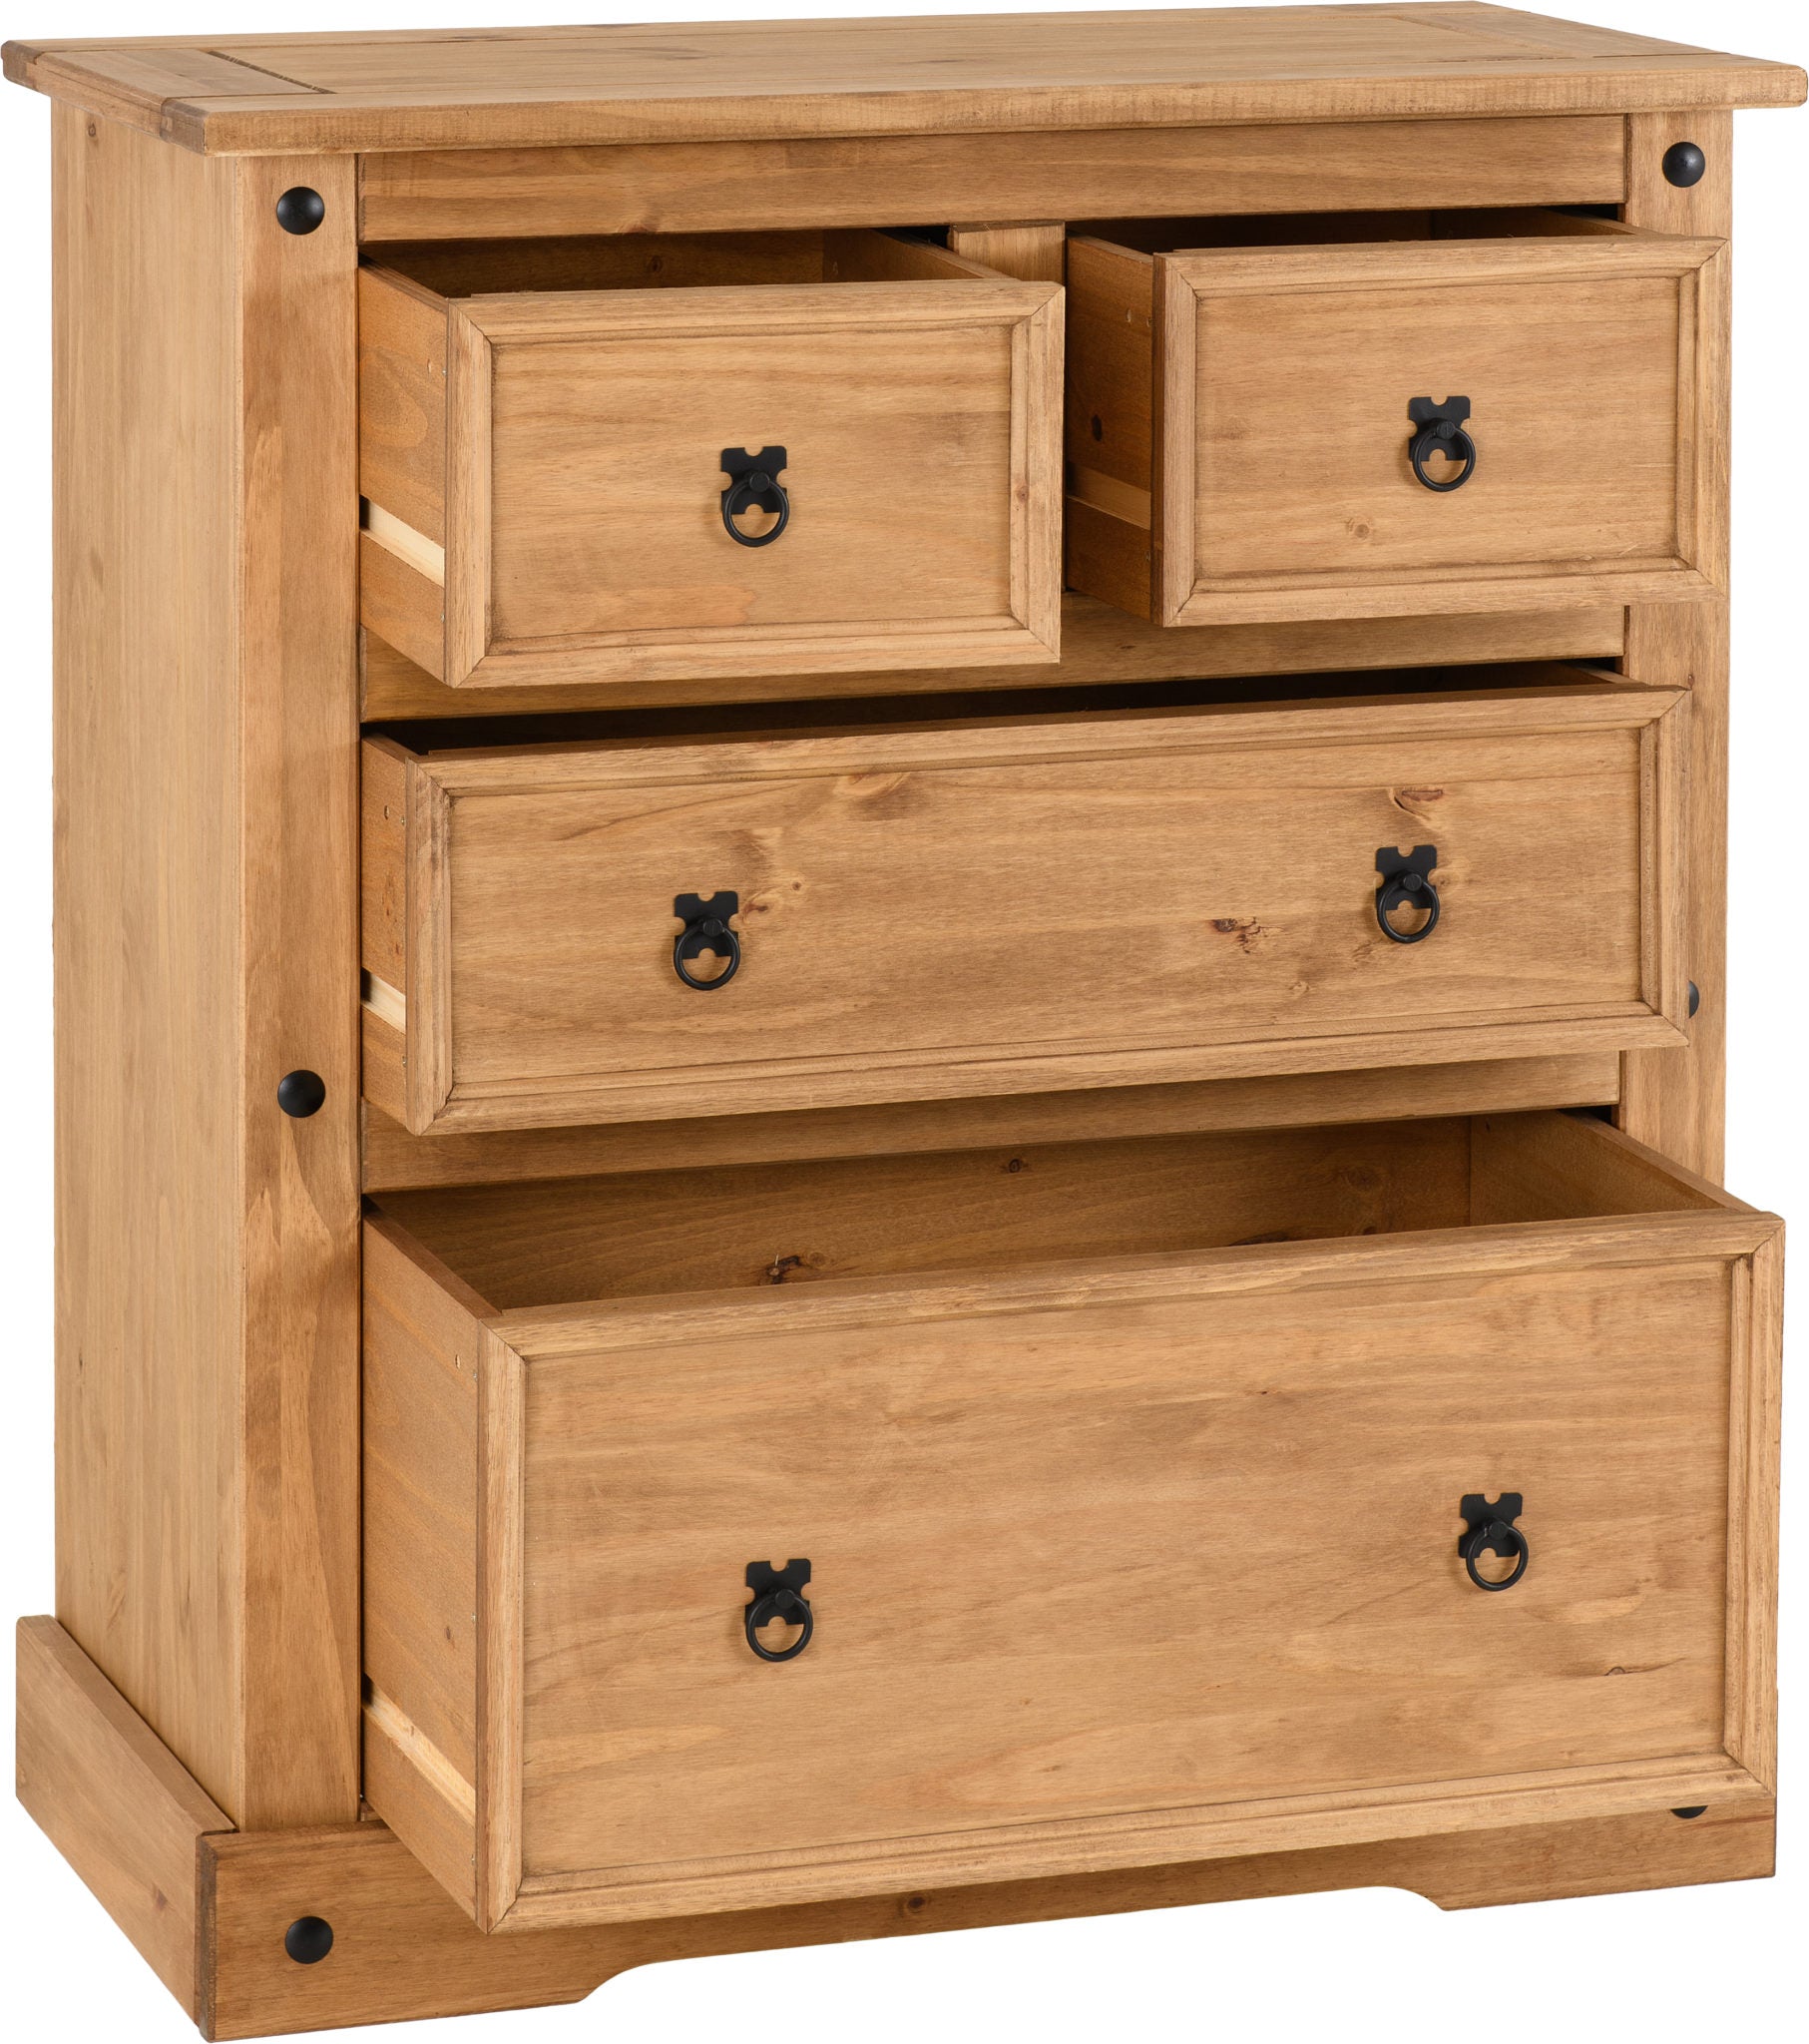 2 2 drawer chest